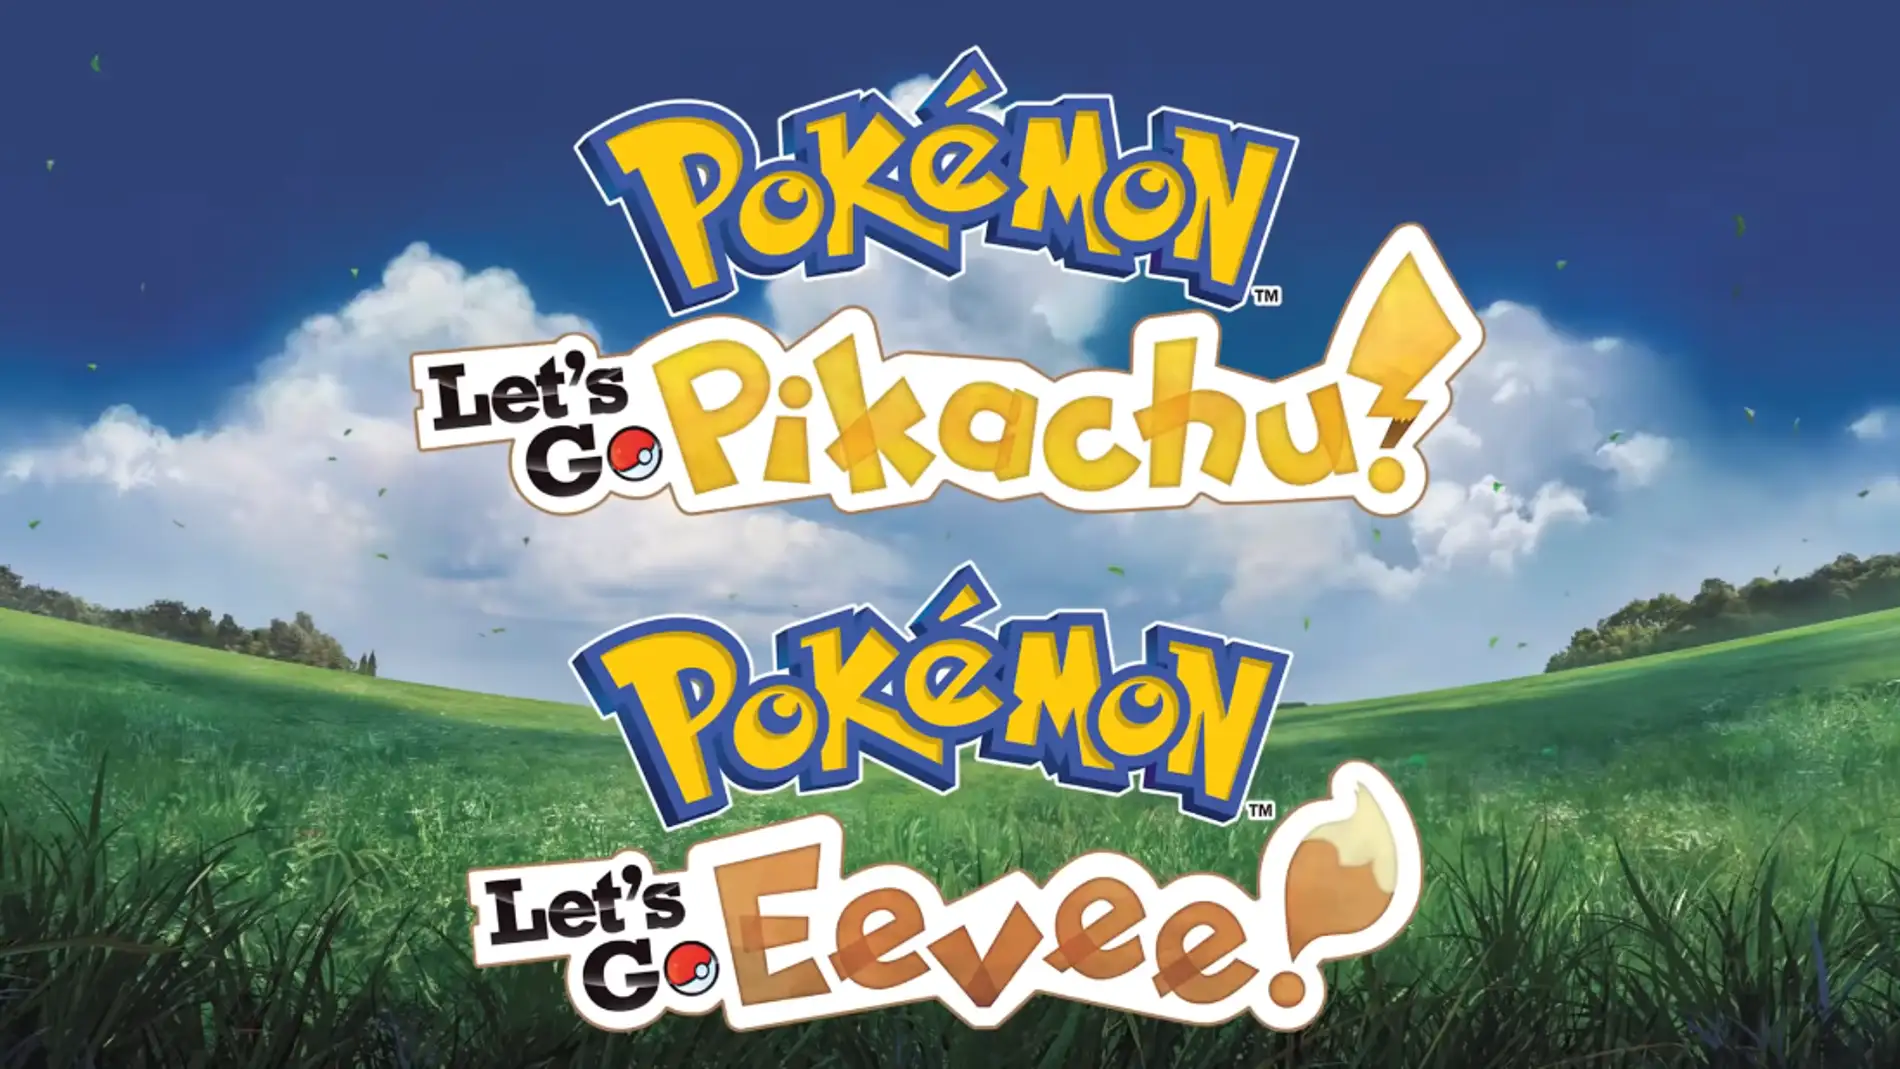 Pokémon: Let's Go